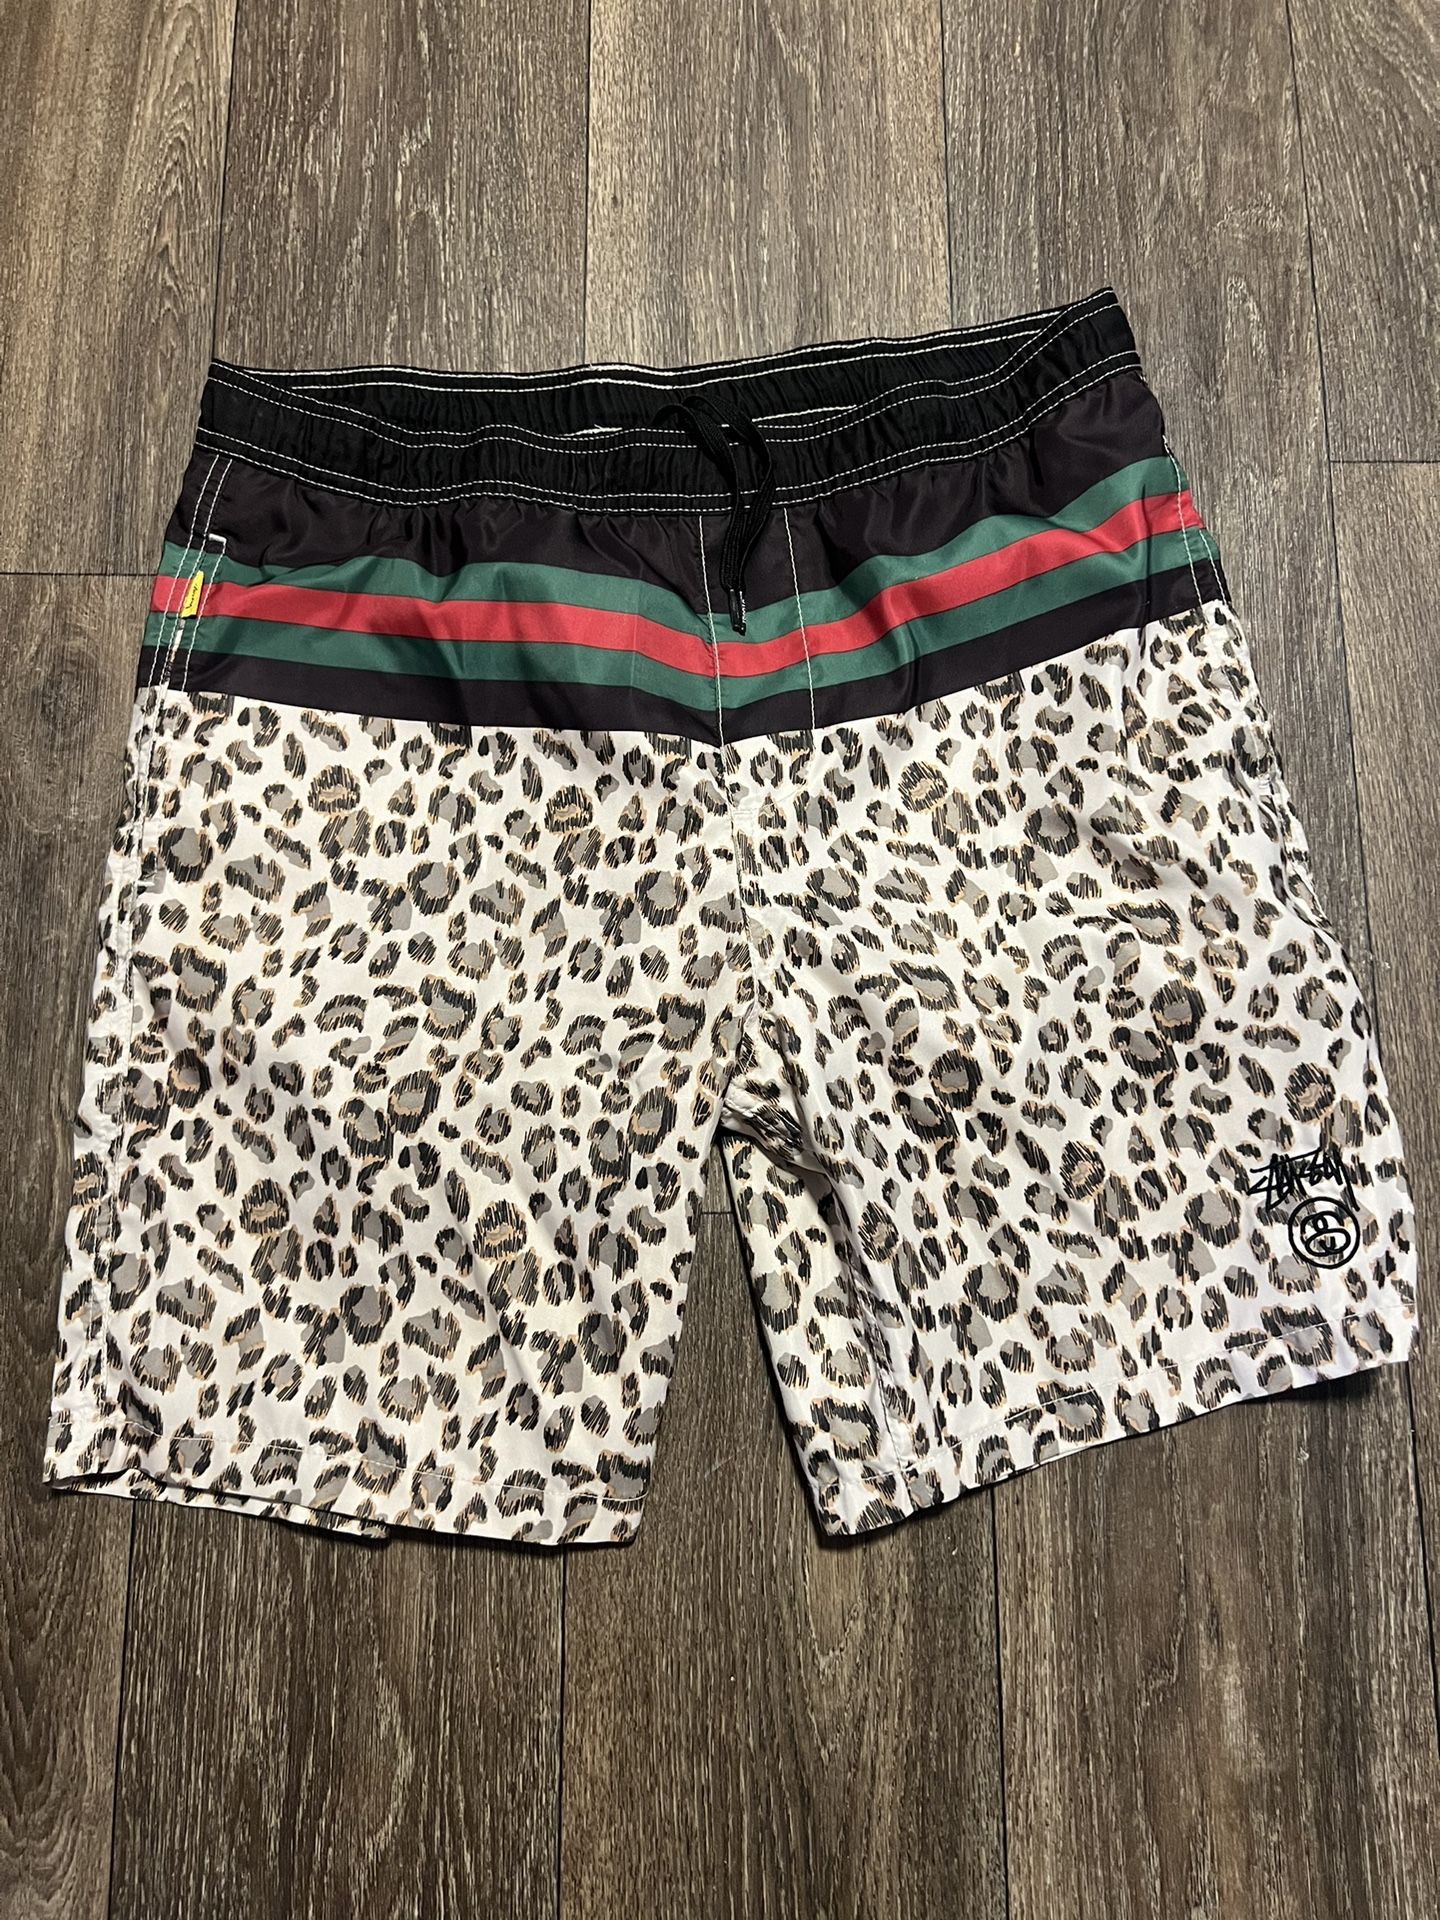 Stussy Swim Trunks Shorts Size Medium Gucci Supreme